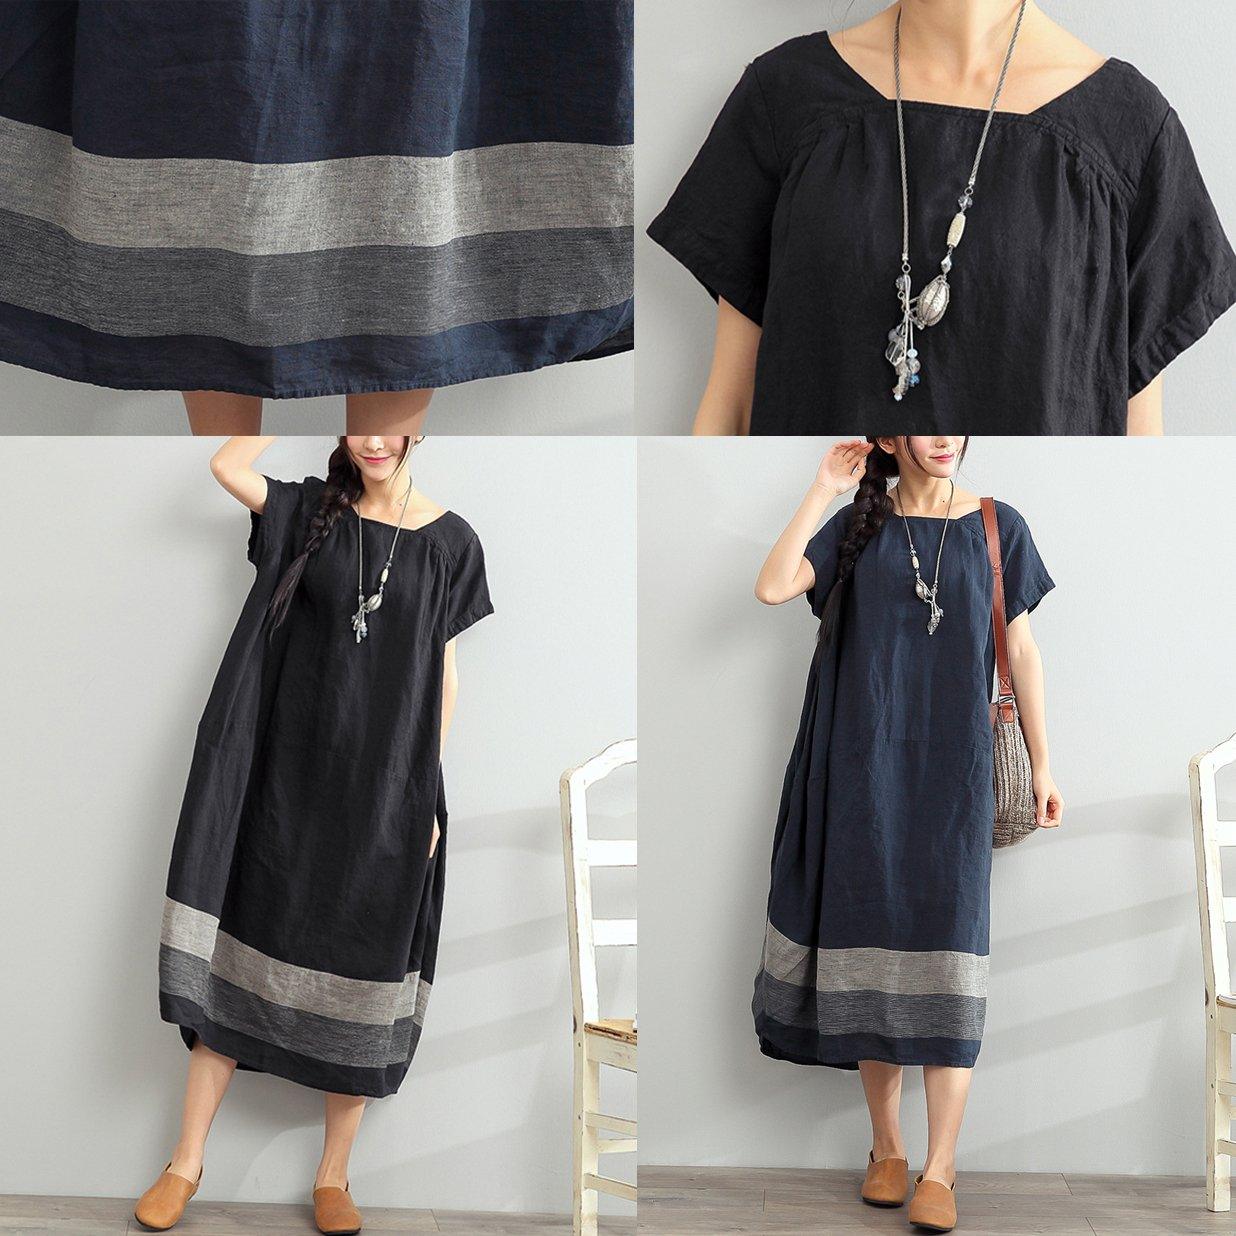 SUNSIOM Plus Size Women Casual Summer Cotton Linen Dress with